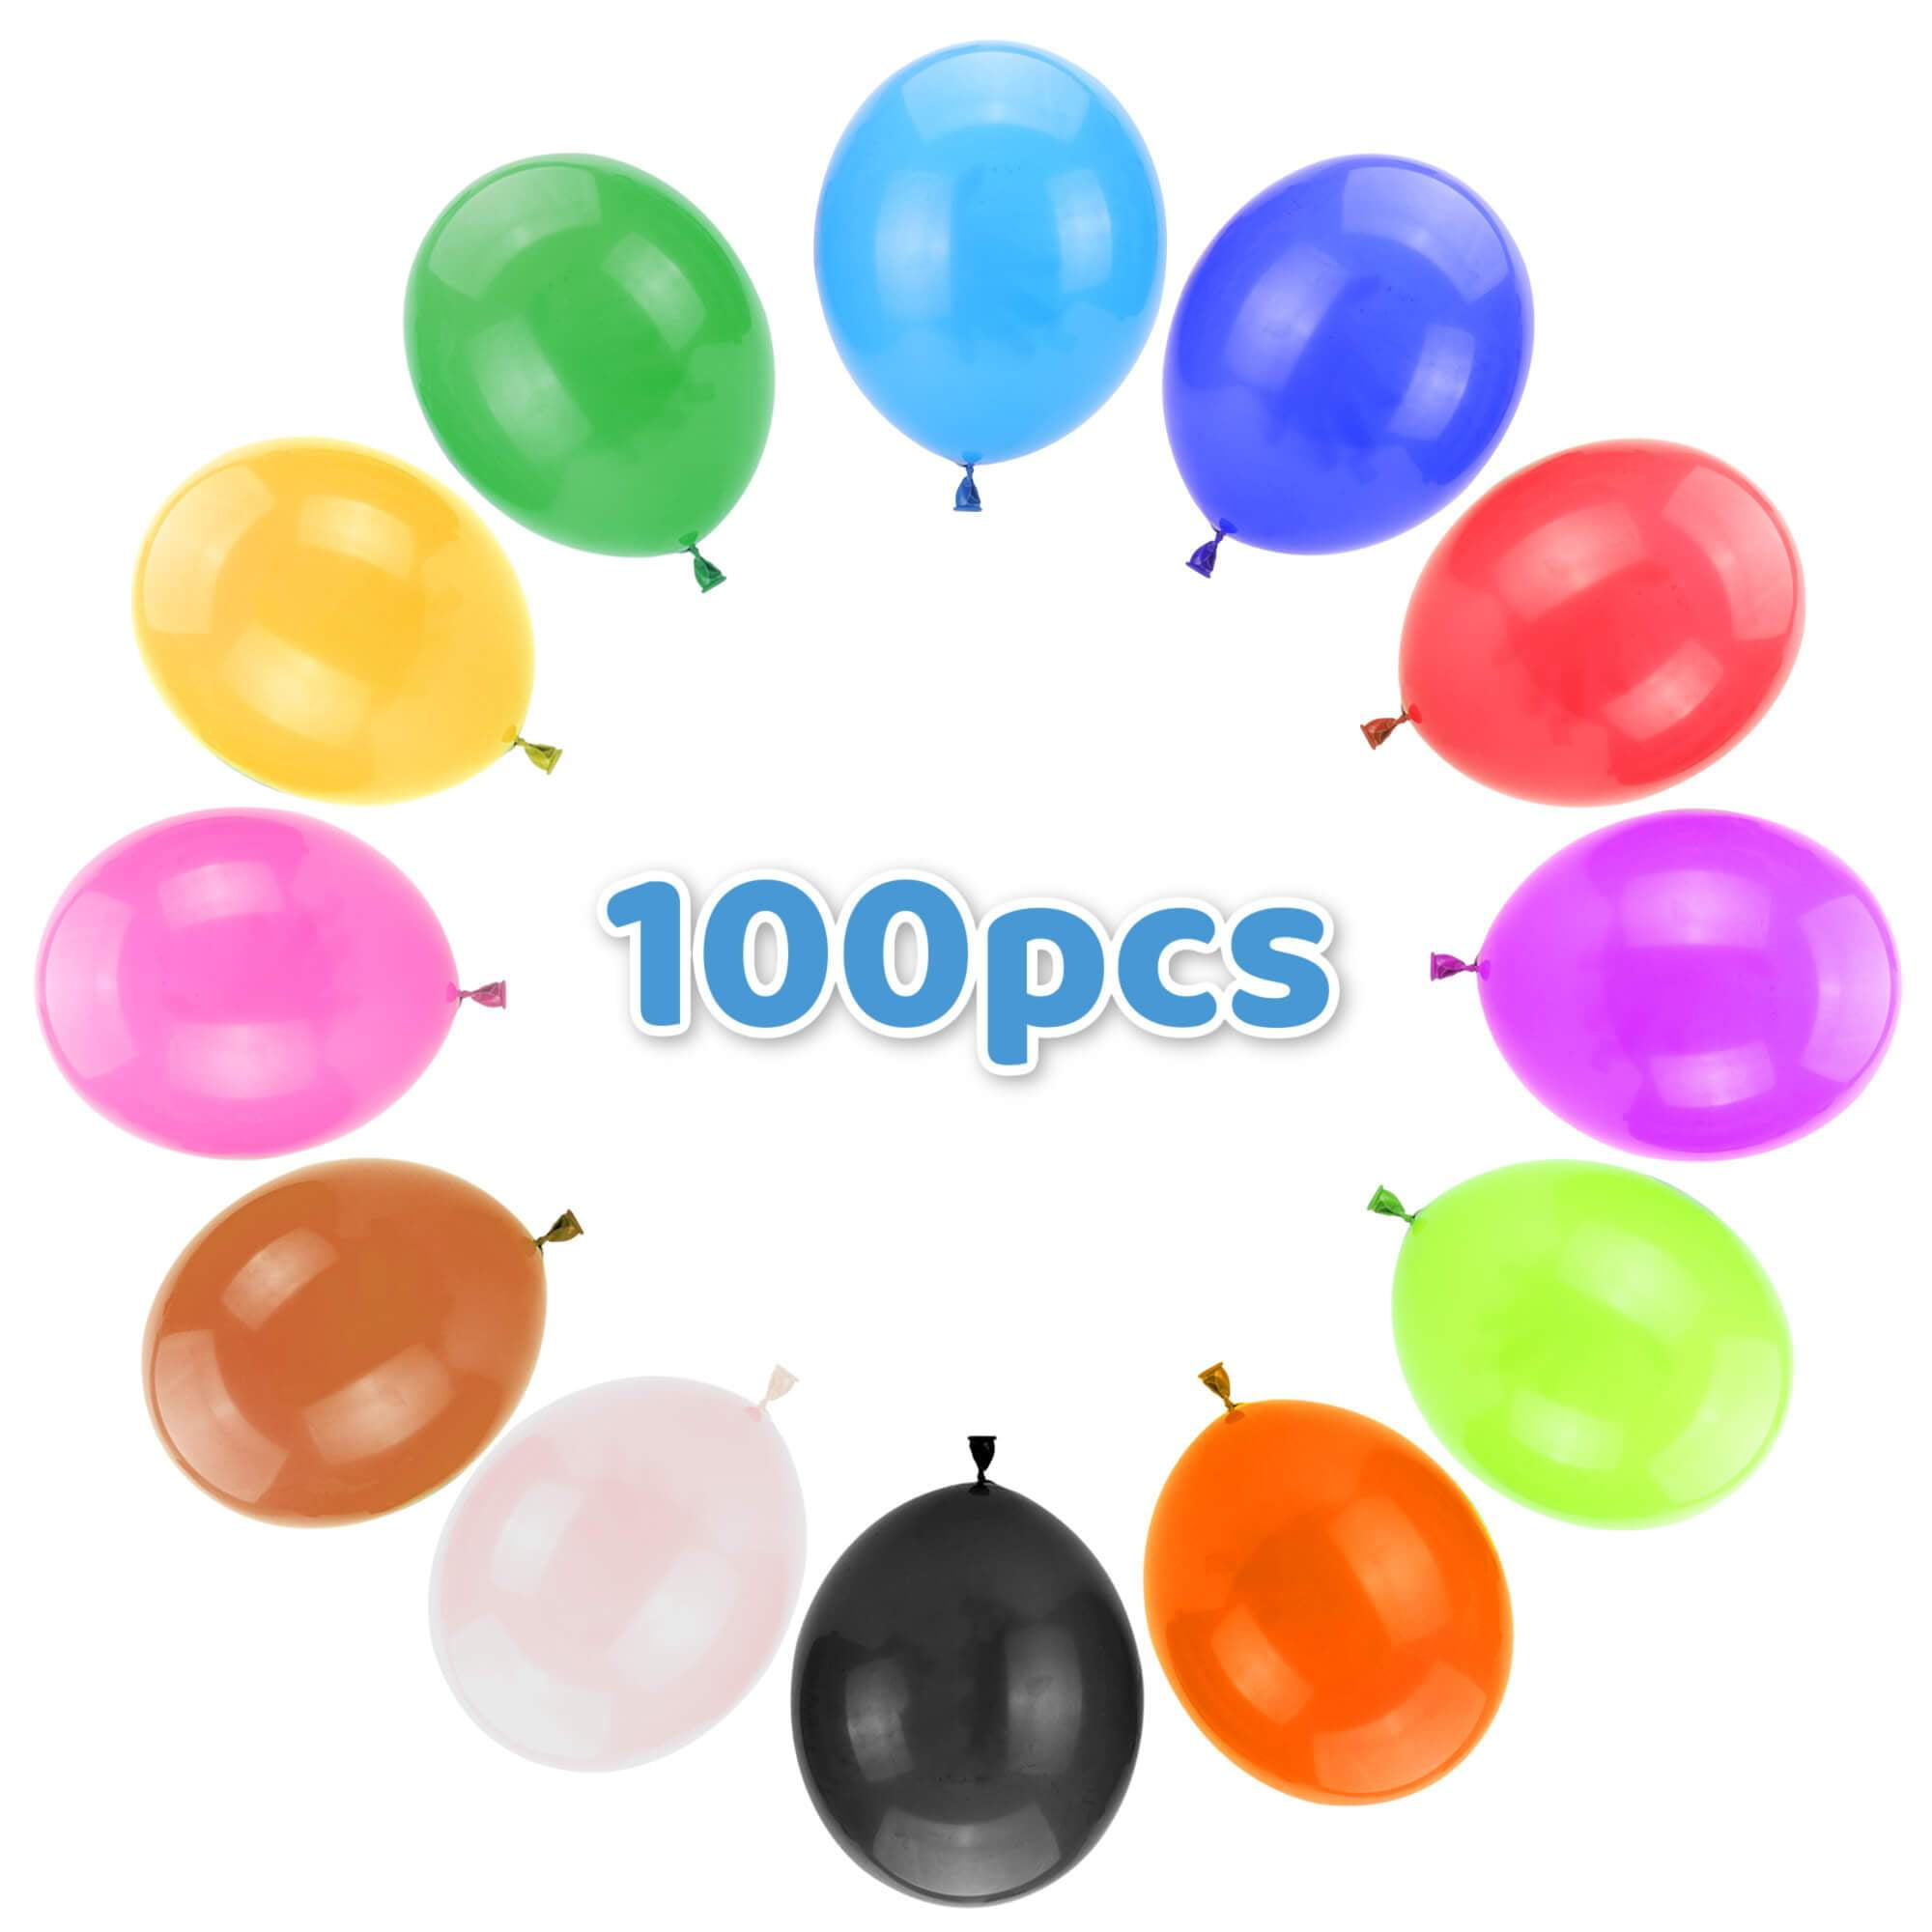 Details about   20 pcs X 10" PEARL Metallic BALLOONS BALLON helium BALOON Birthday Party baloons 